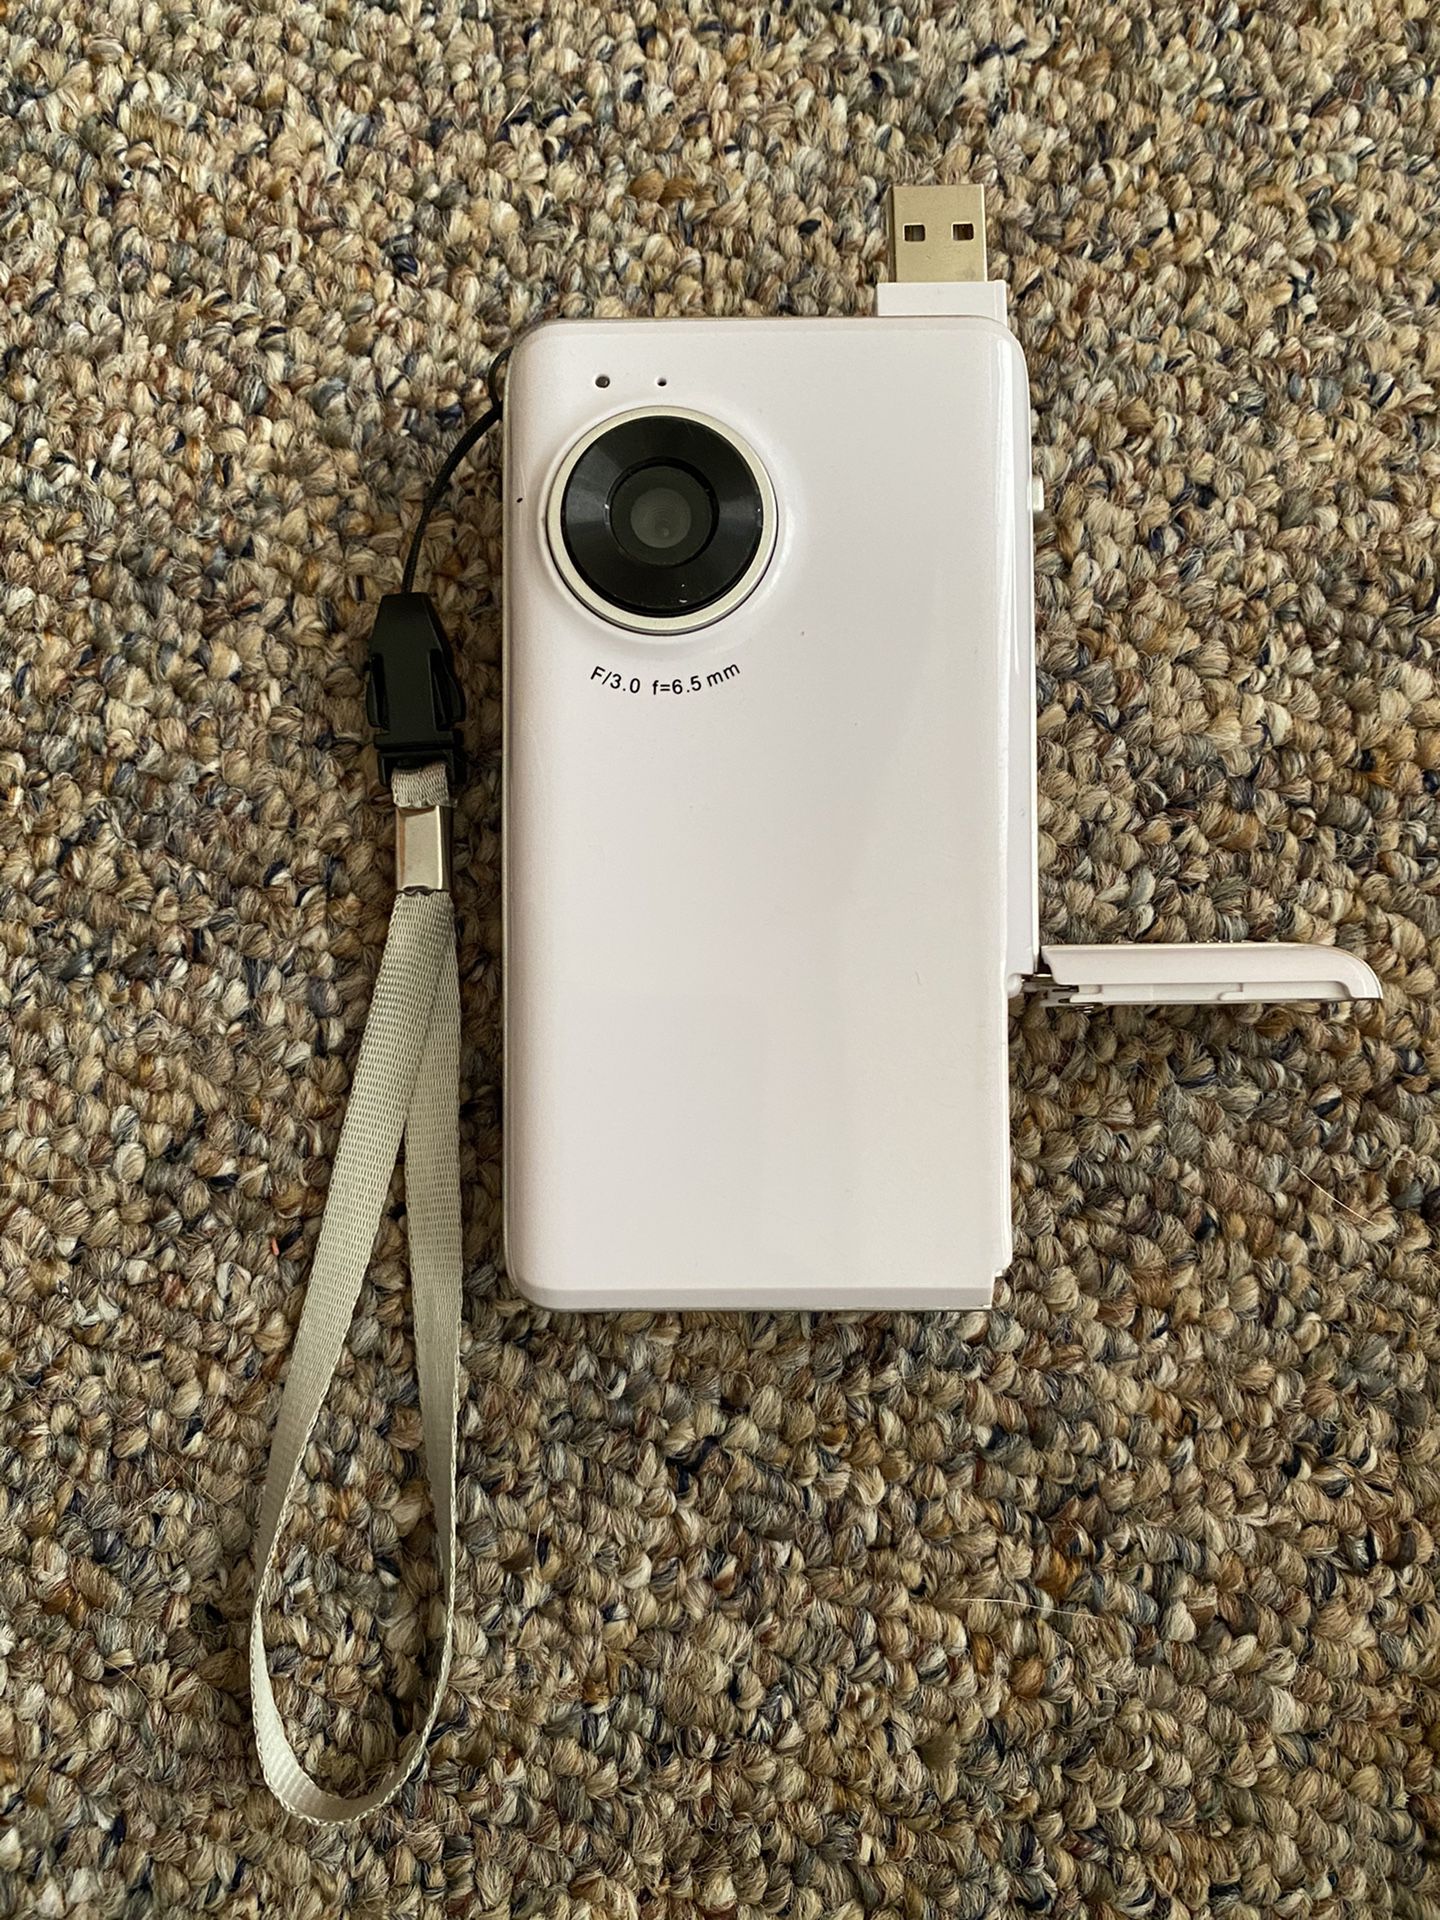 Video Camera